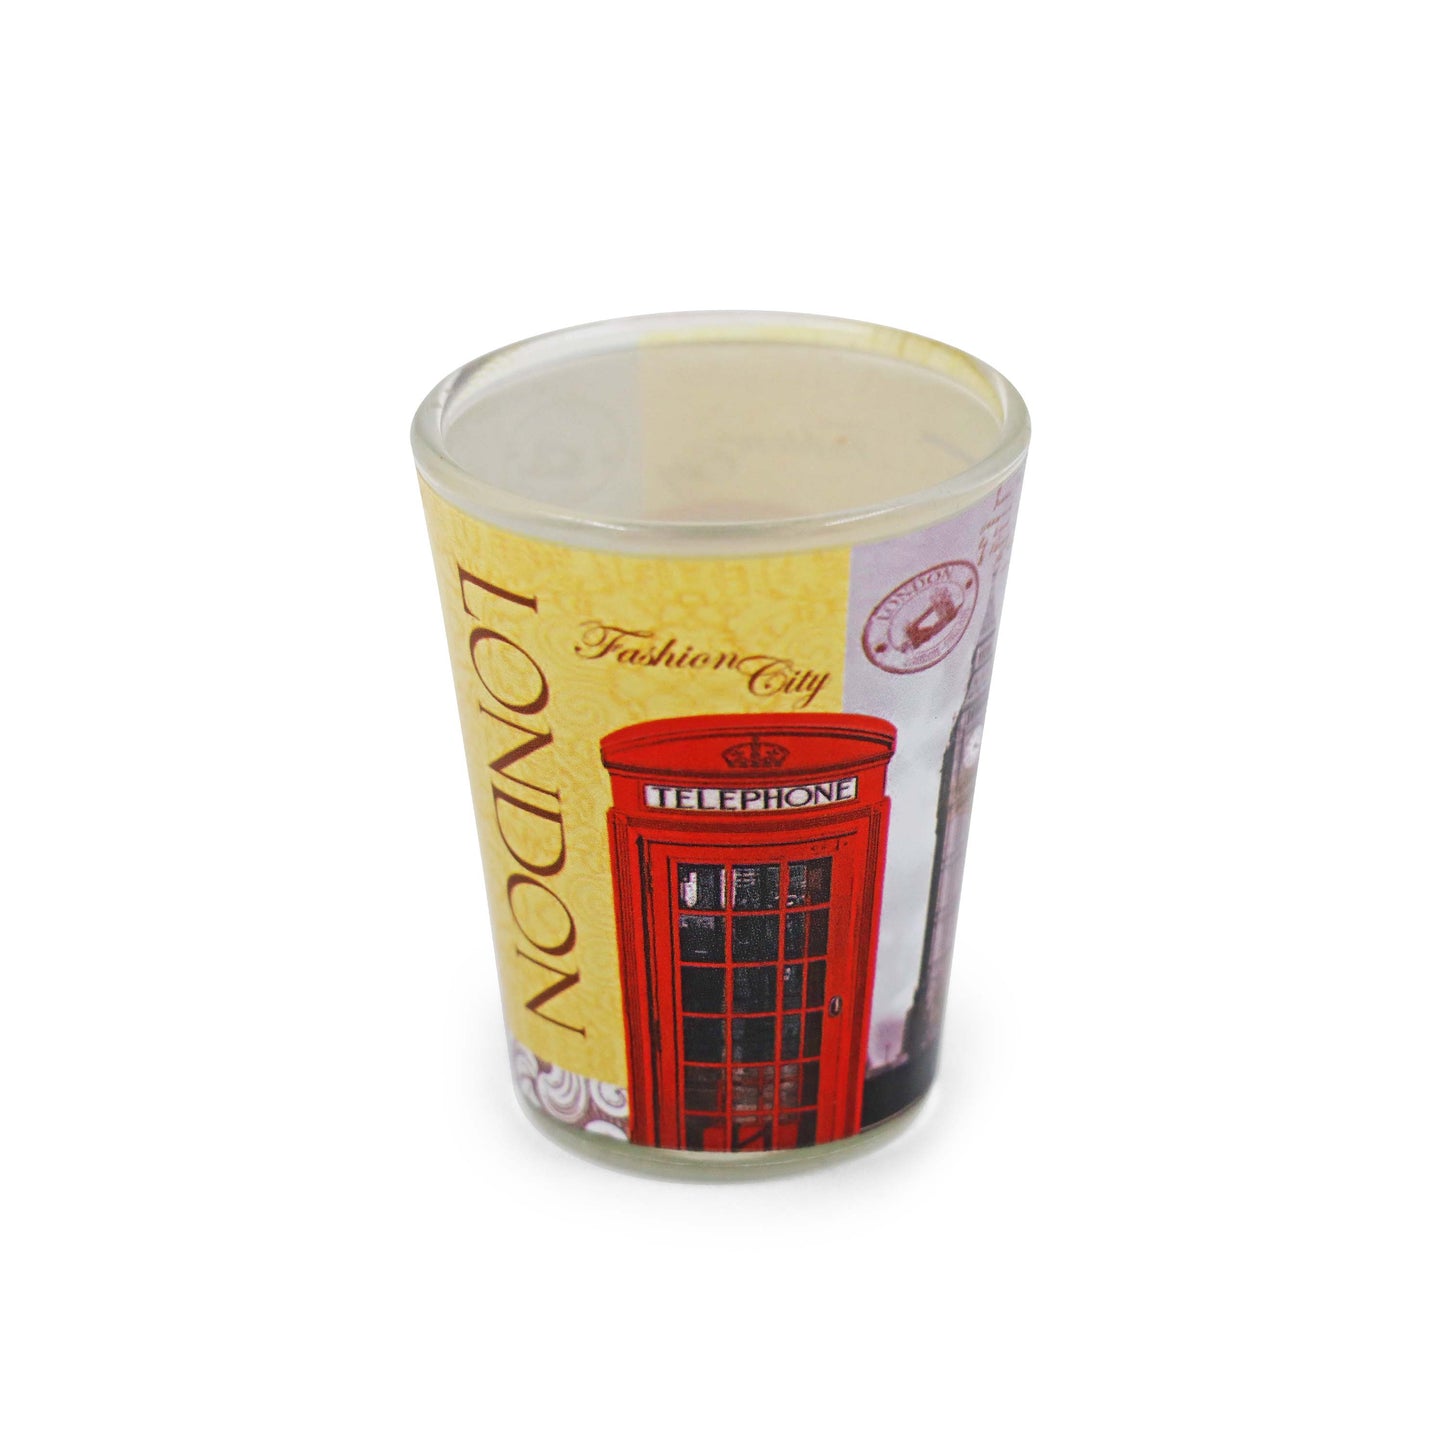 Classic London Shot Glass - Fashion City- Big Ben, Red Telephone Box Shot Glass